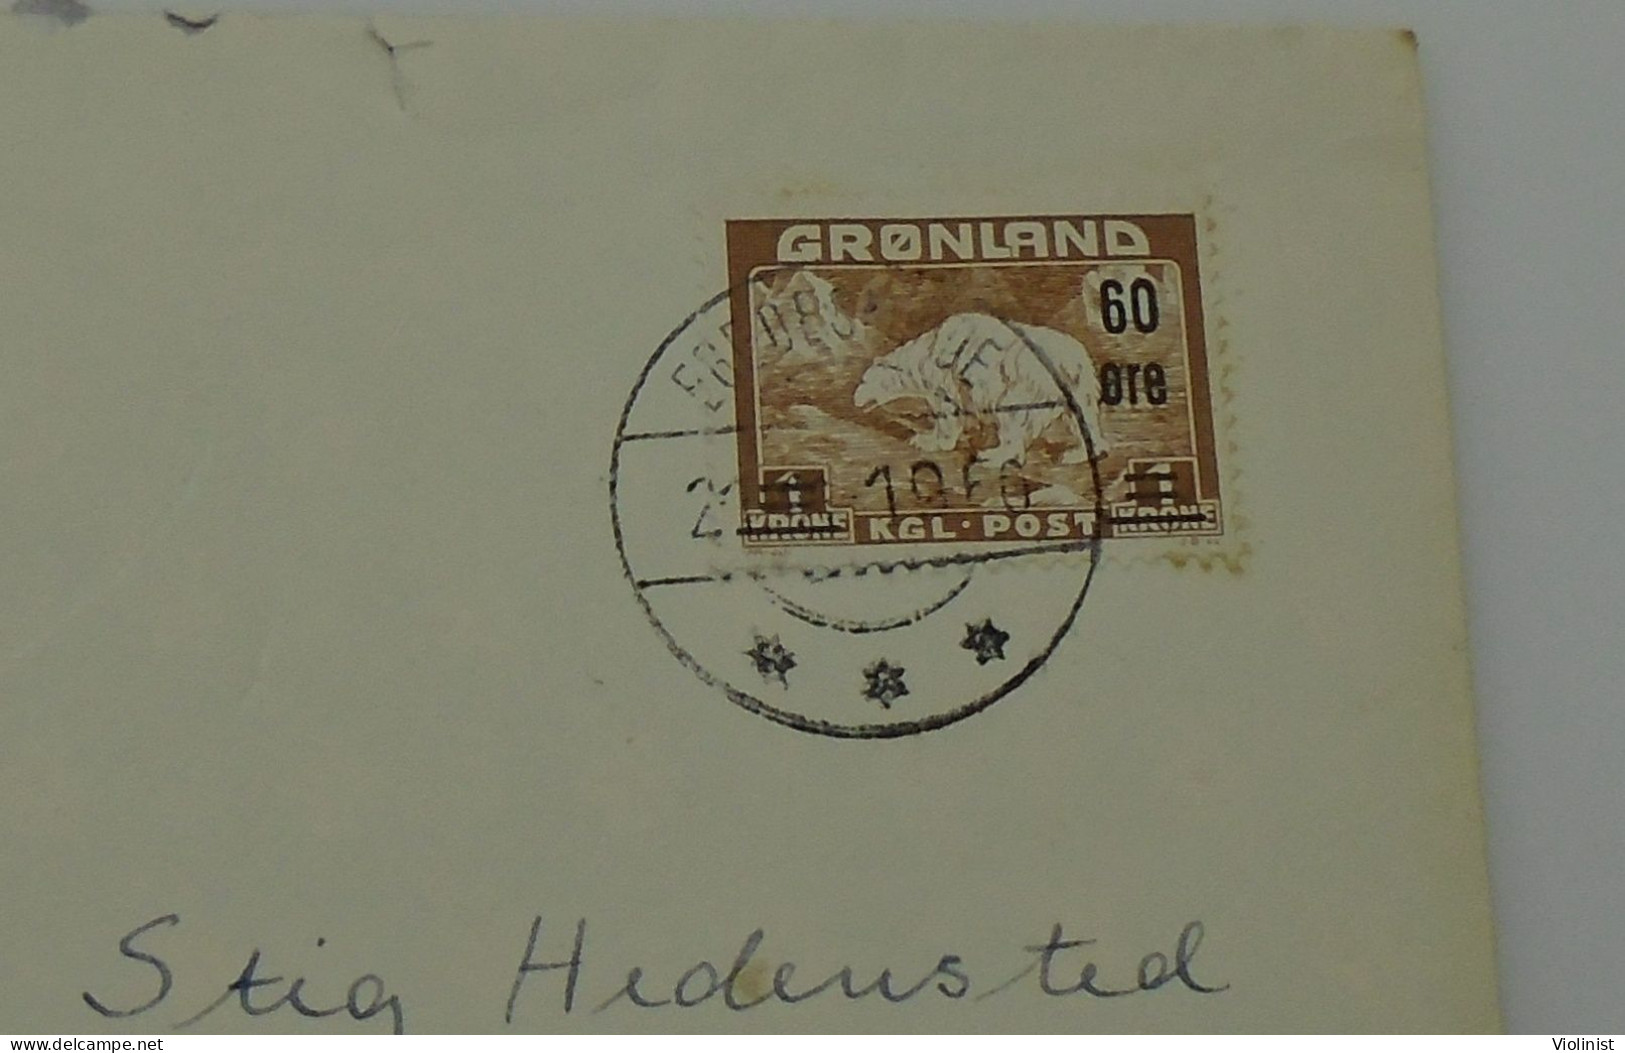 Greenland-Kongelig Post GRØNLAND- Postmark 1960 - Marcophilie